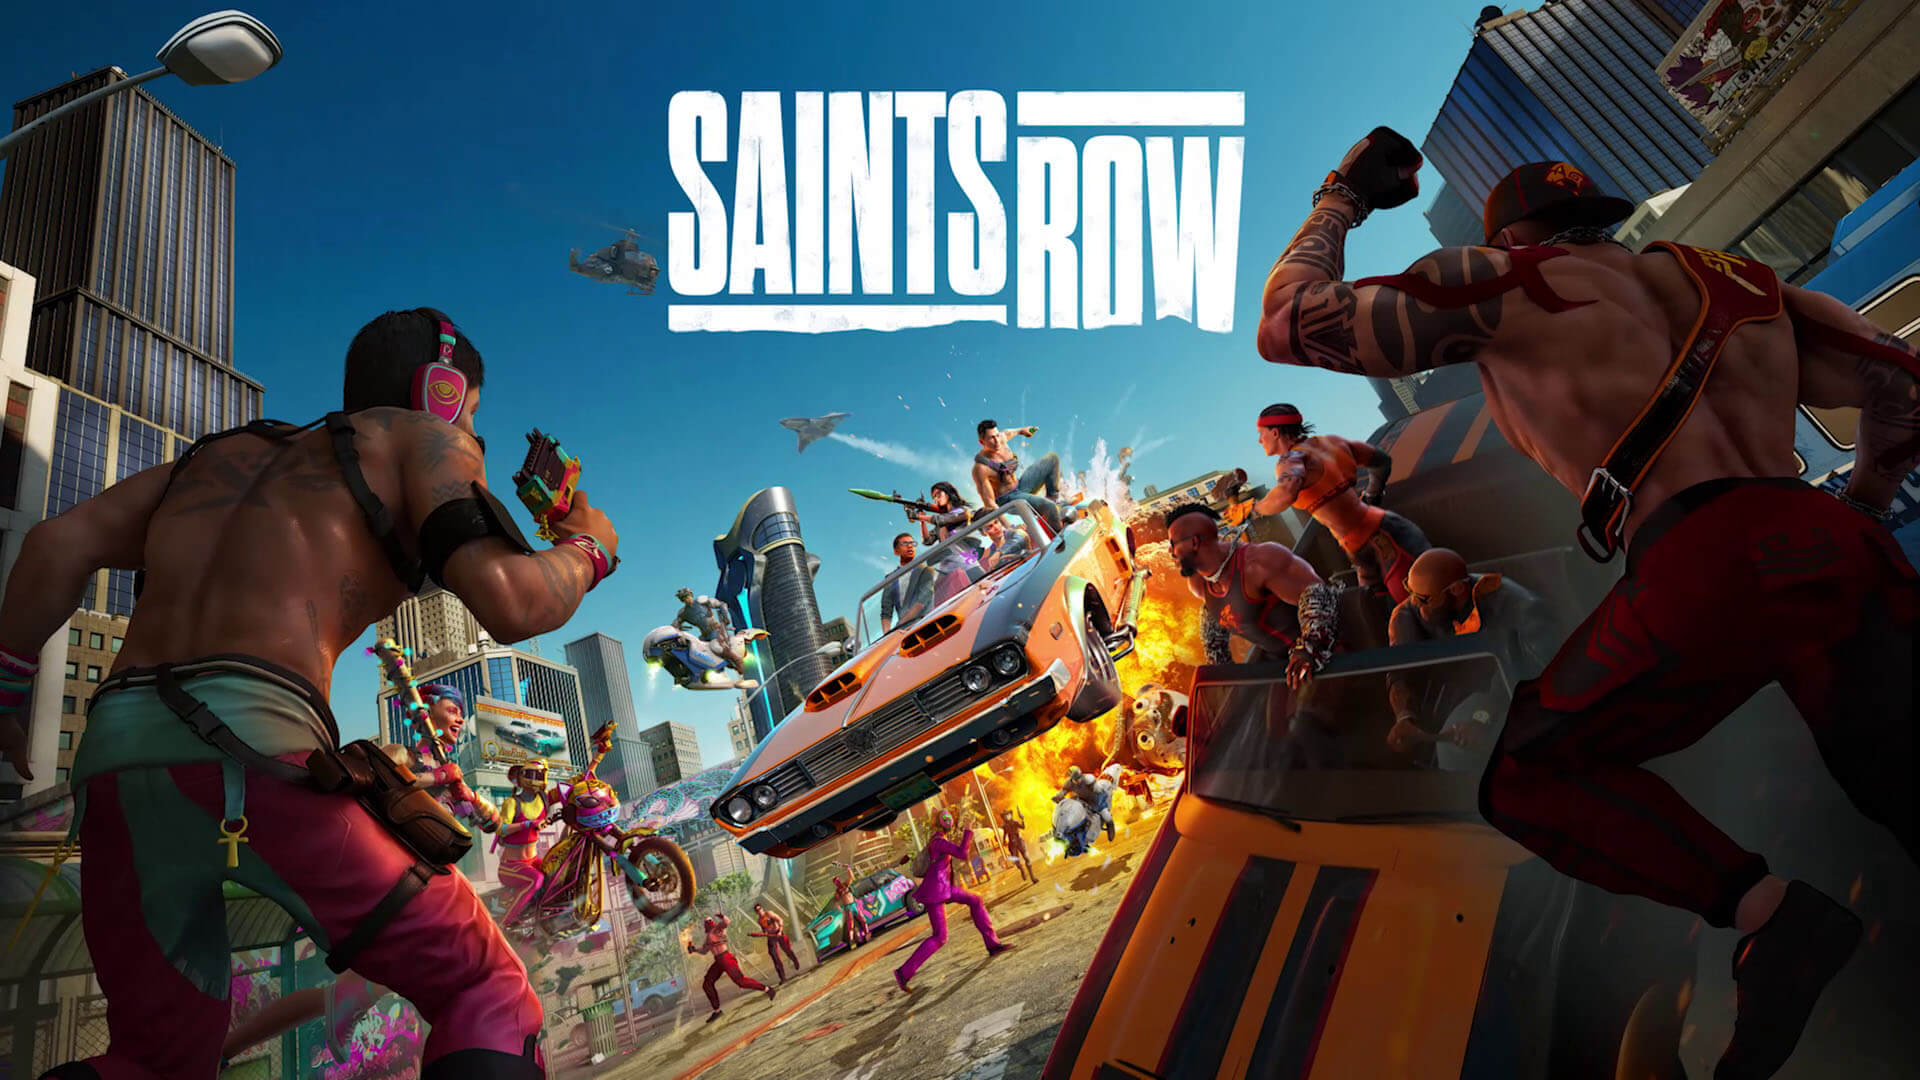 Saints Row (2022) customization trailer: Socks, guns, cars and more